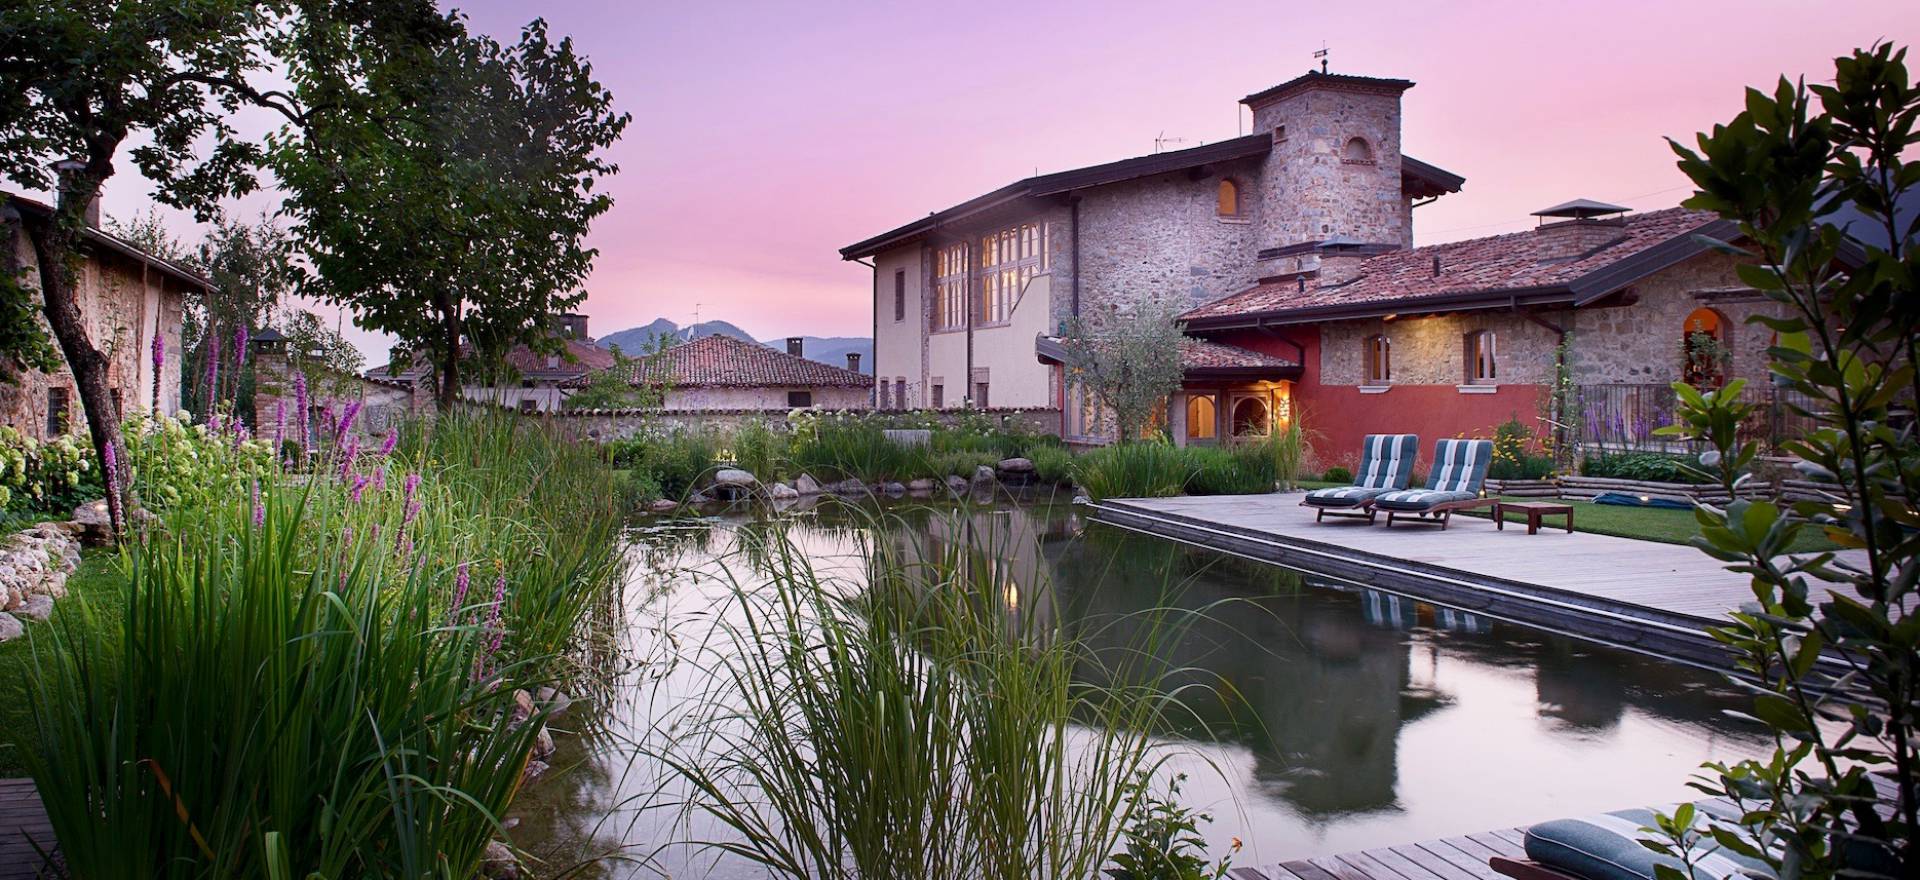 Agriturismo Lake Como and Lake Garda Country hotel Lake Garda, a luxurious oasis of peace